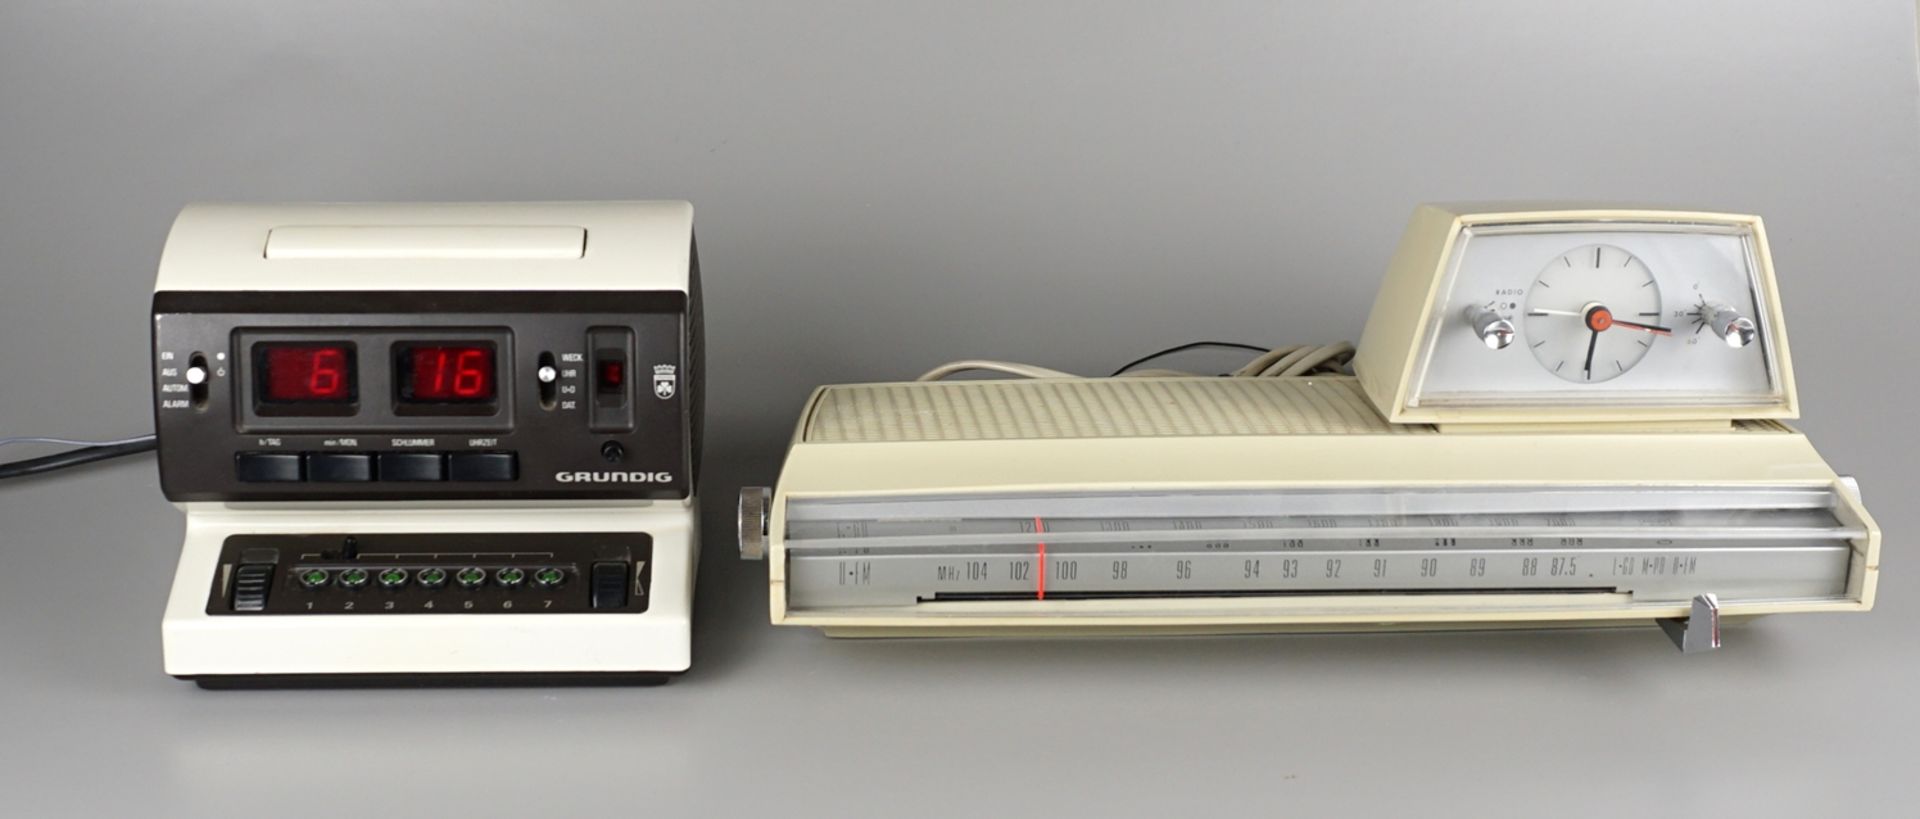 2 radios with alarm function, a.o. Grundig, 1970s/1980s